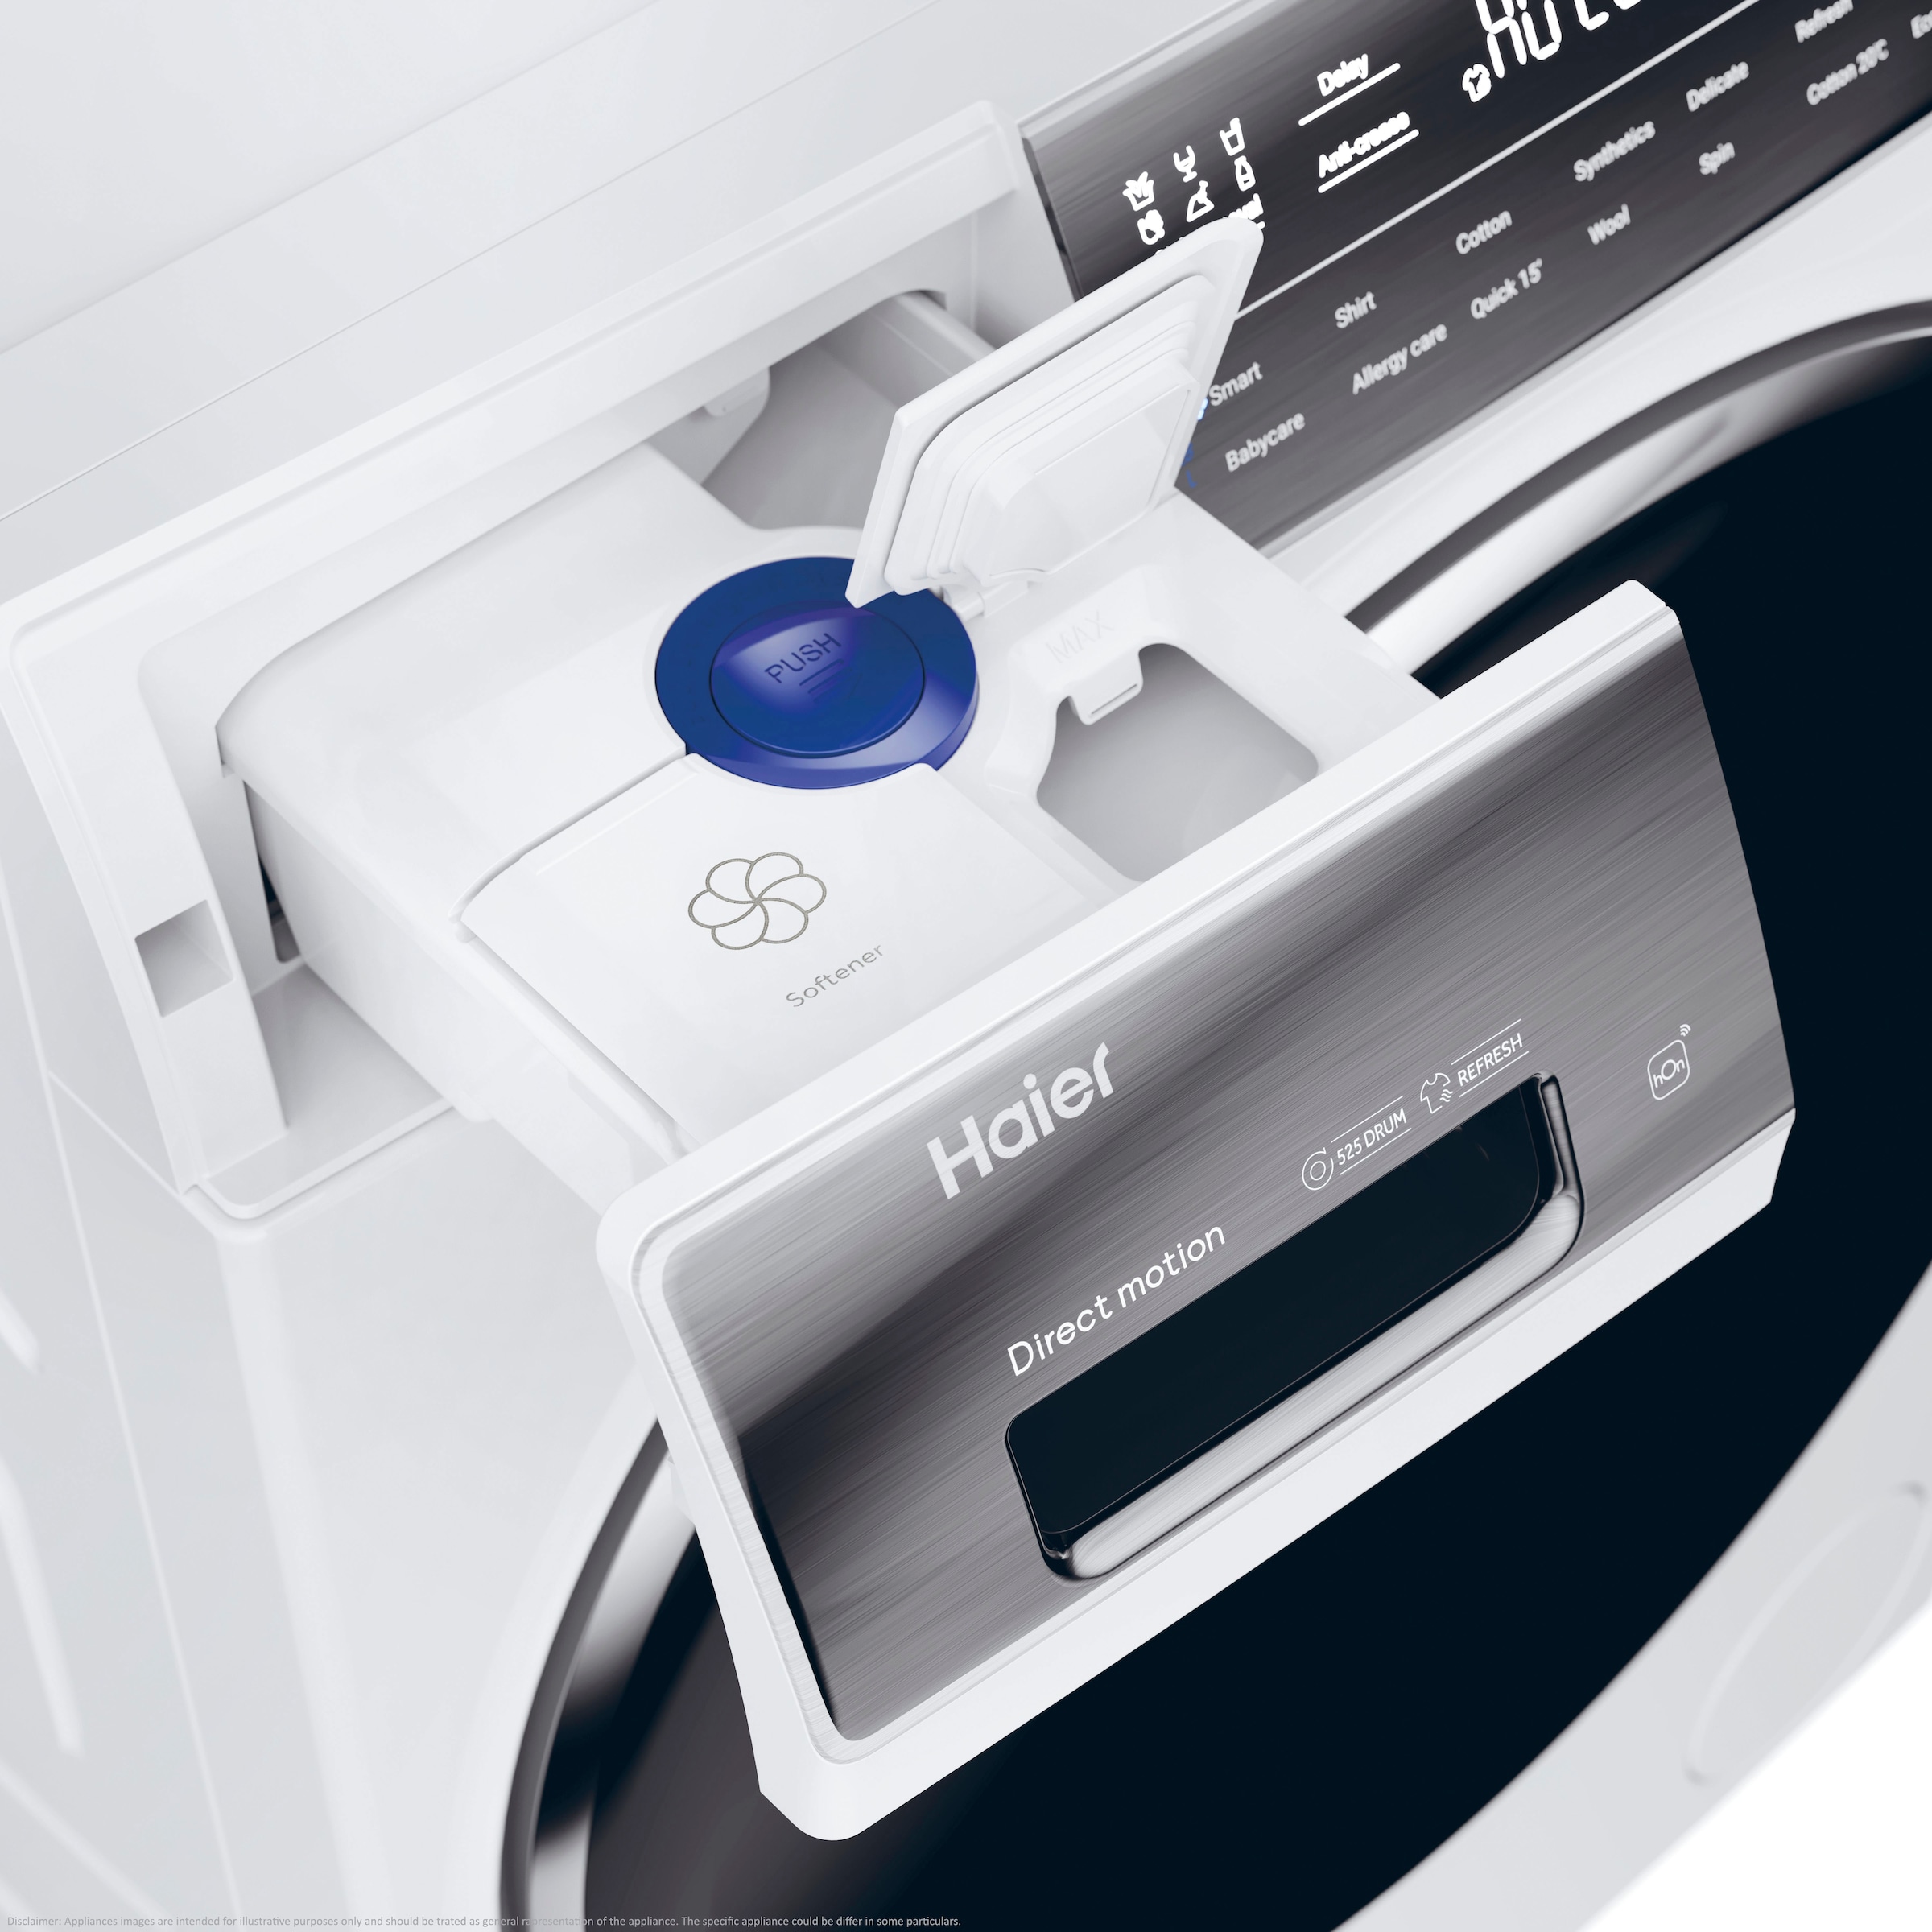 Haier Waschmaschine »HW90-BD14979EU1«, HW90-BD14979EU1, 9 kg, 1400 U/min, Smarte Bedienung via hOn App